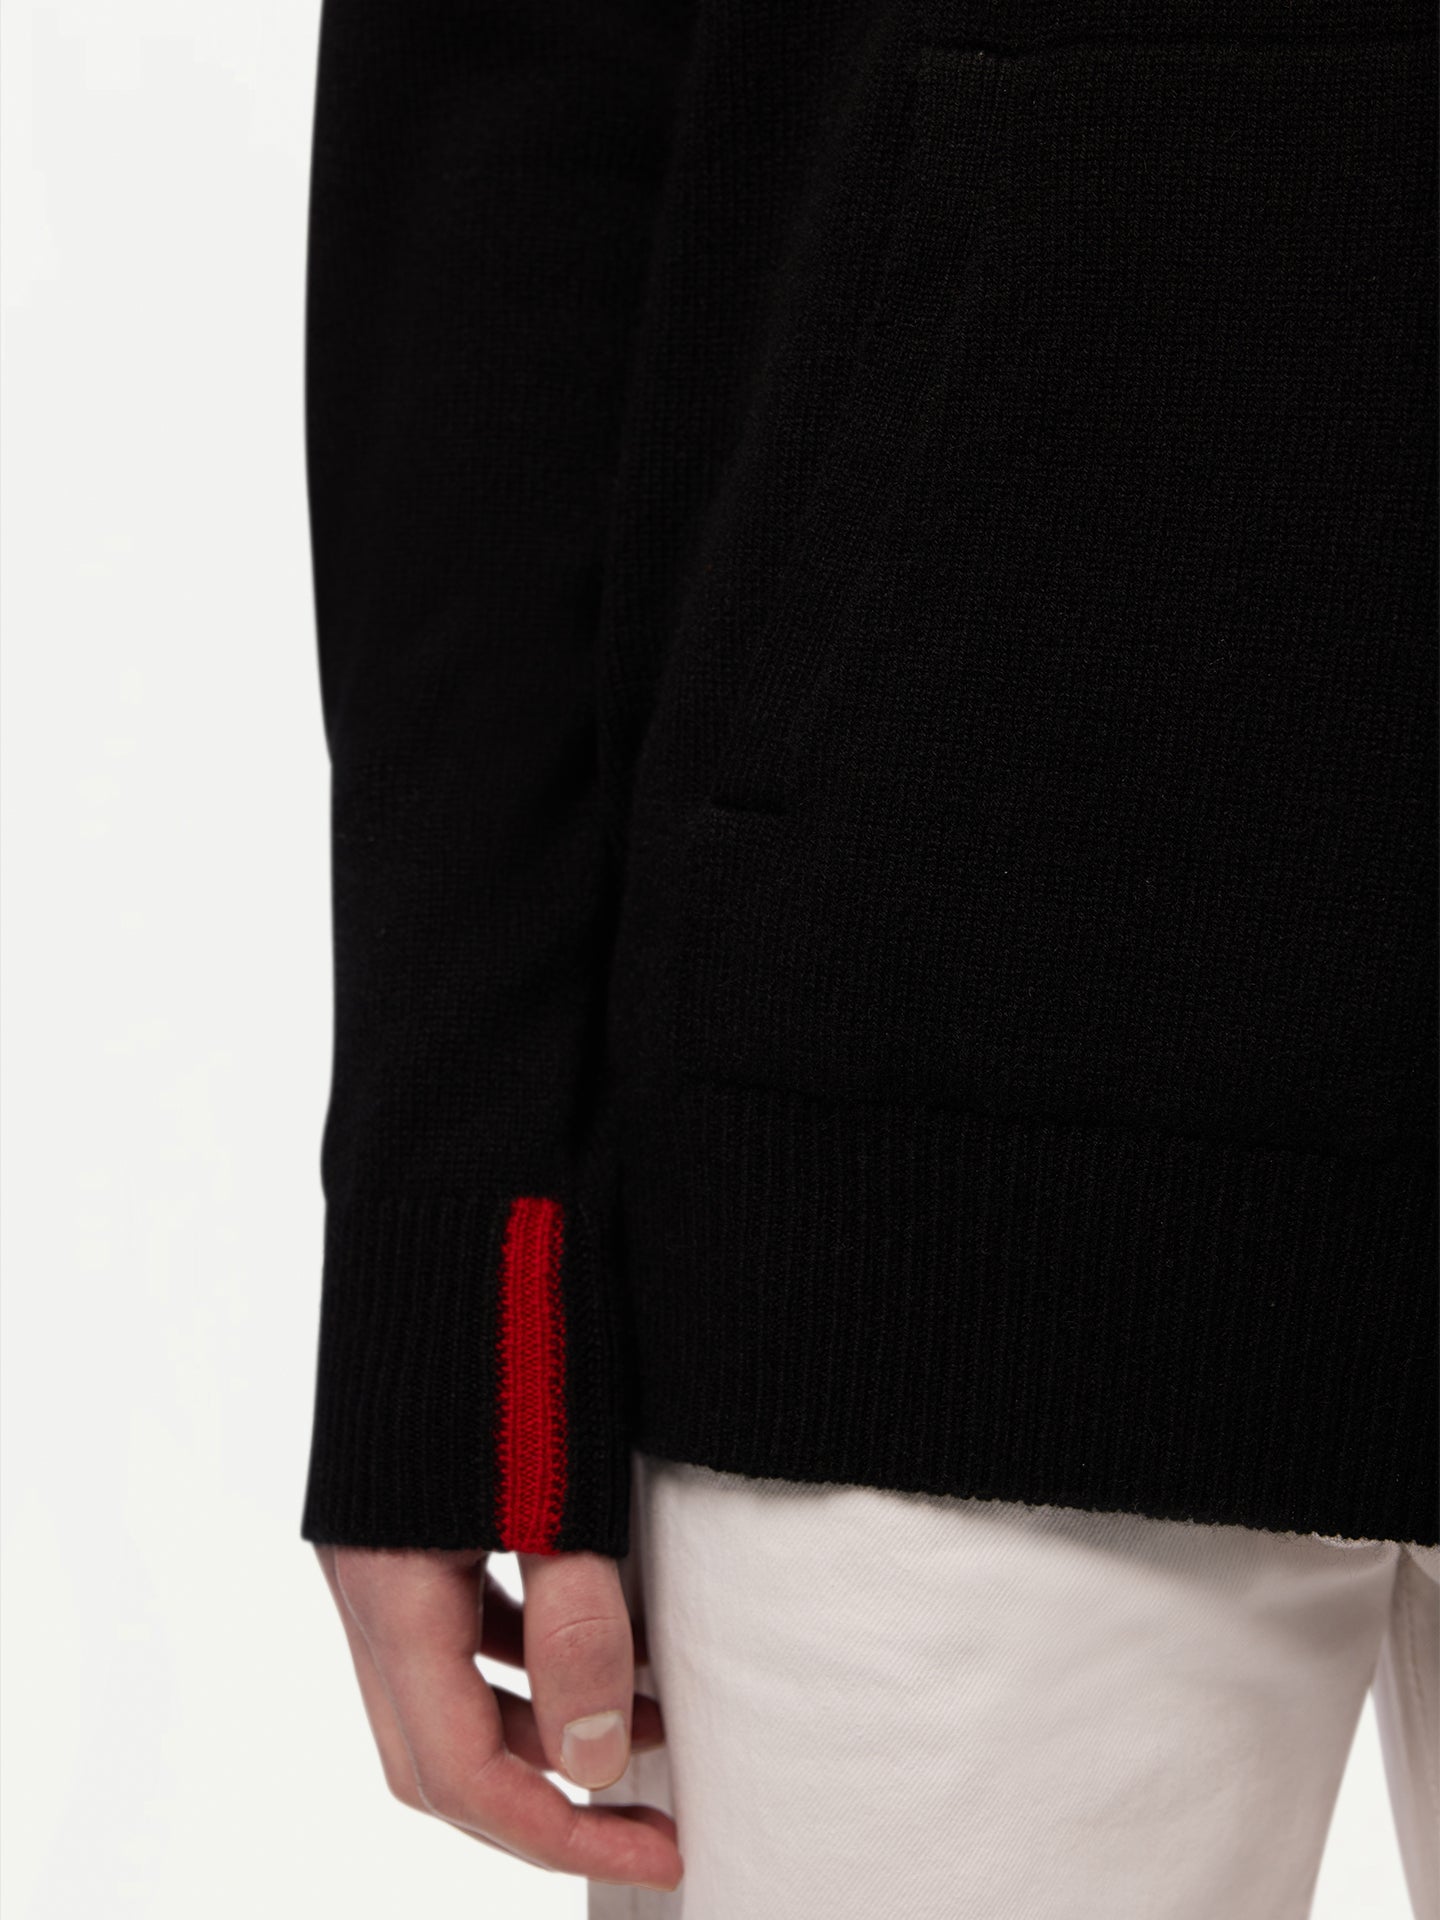 Men’s Cashmere Pullover Black- Gobi Cashmere